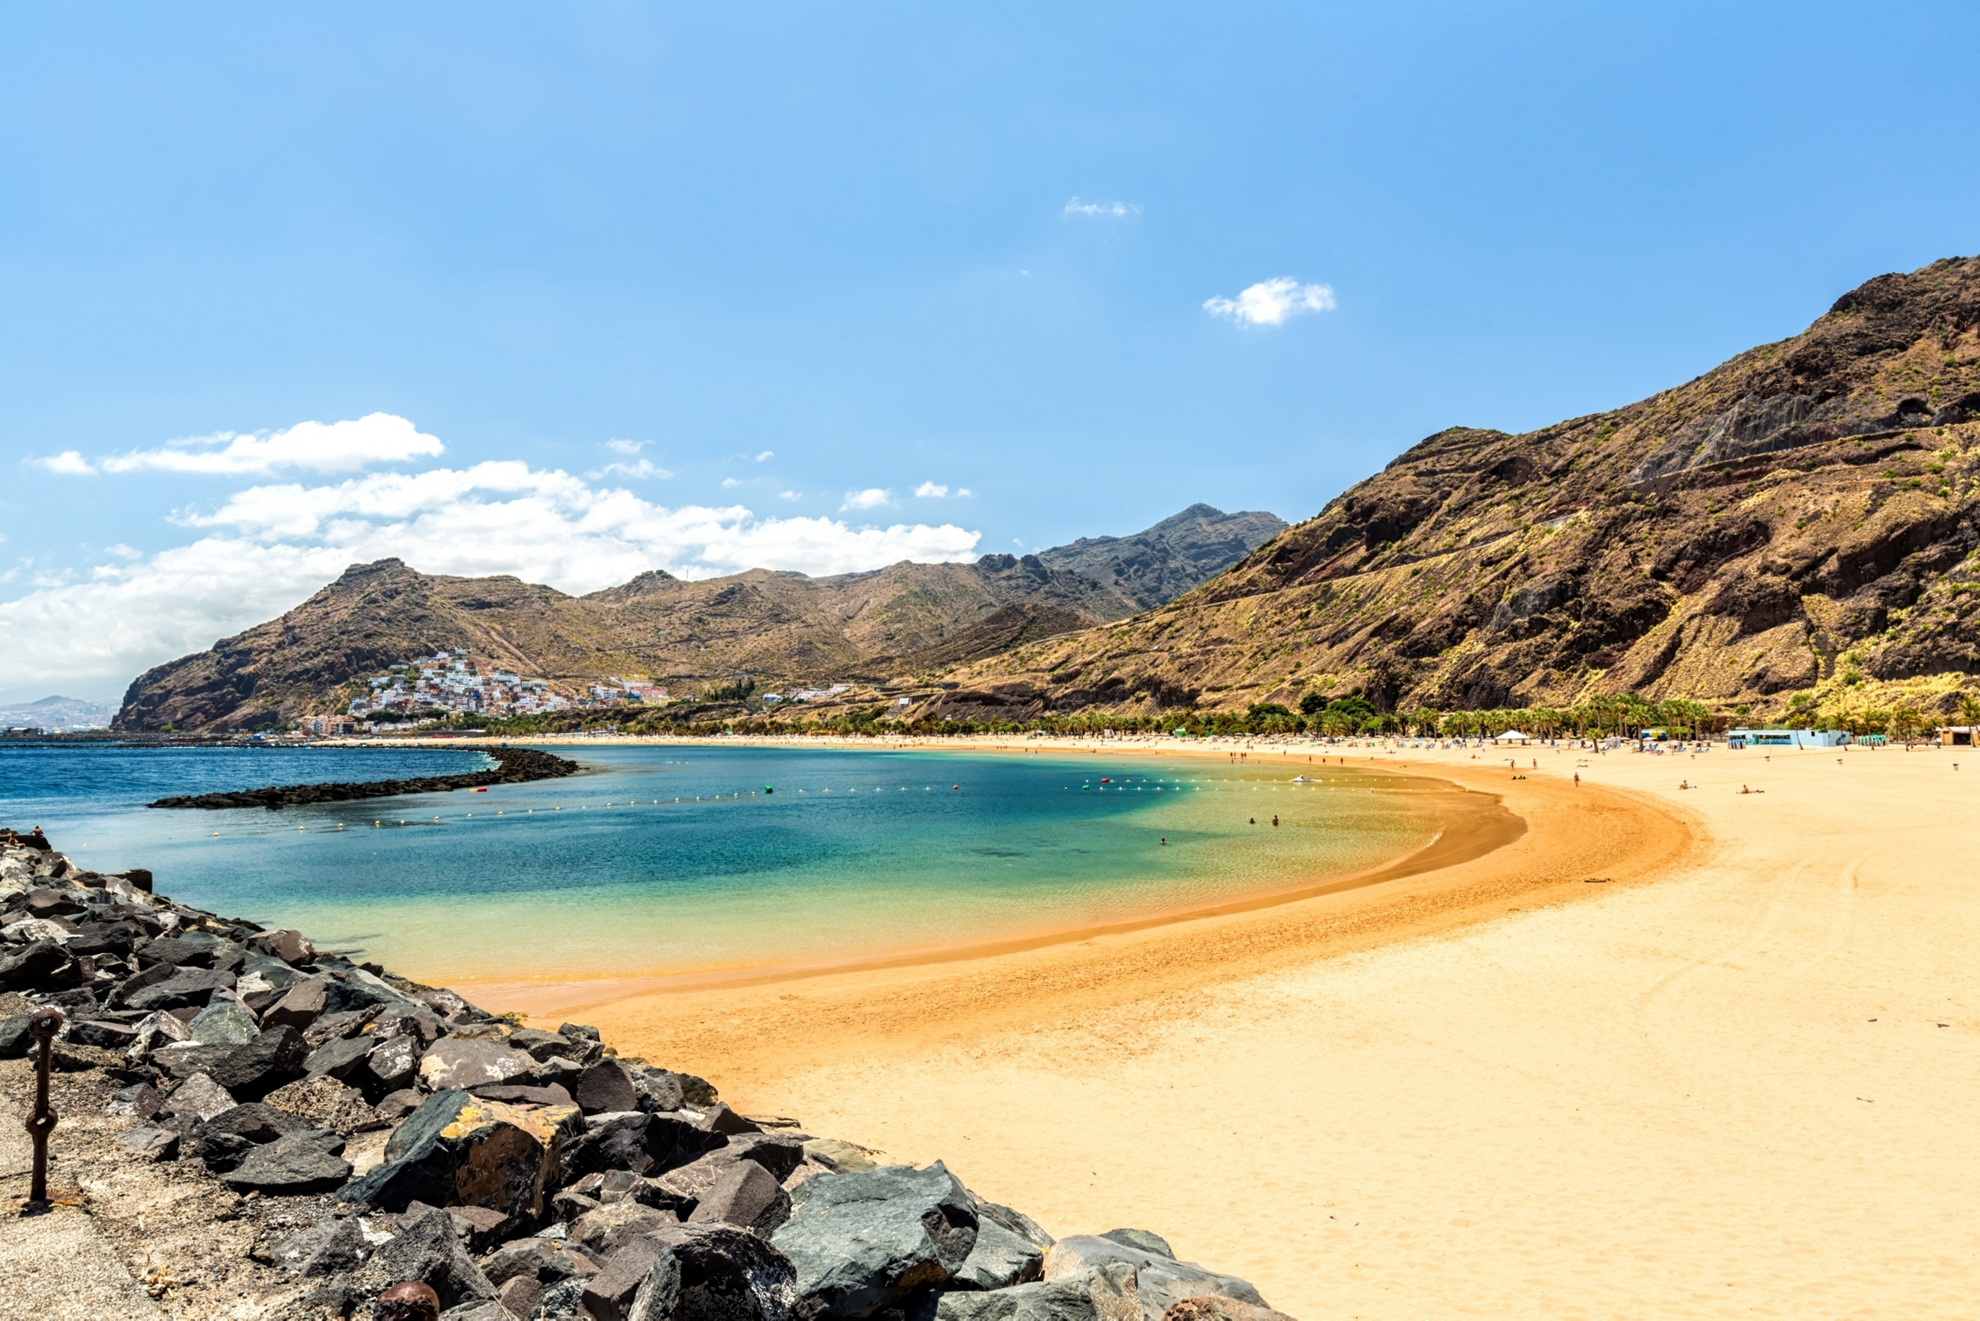 Playa de Las Teresitas in Tenerife / Canary Islands